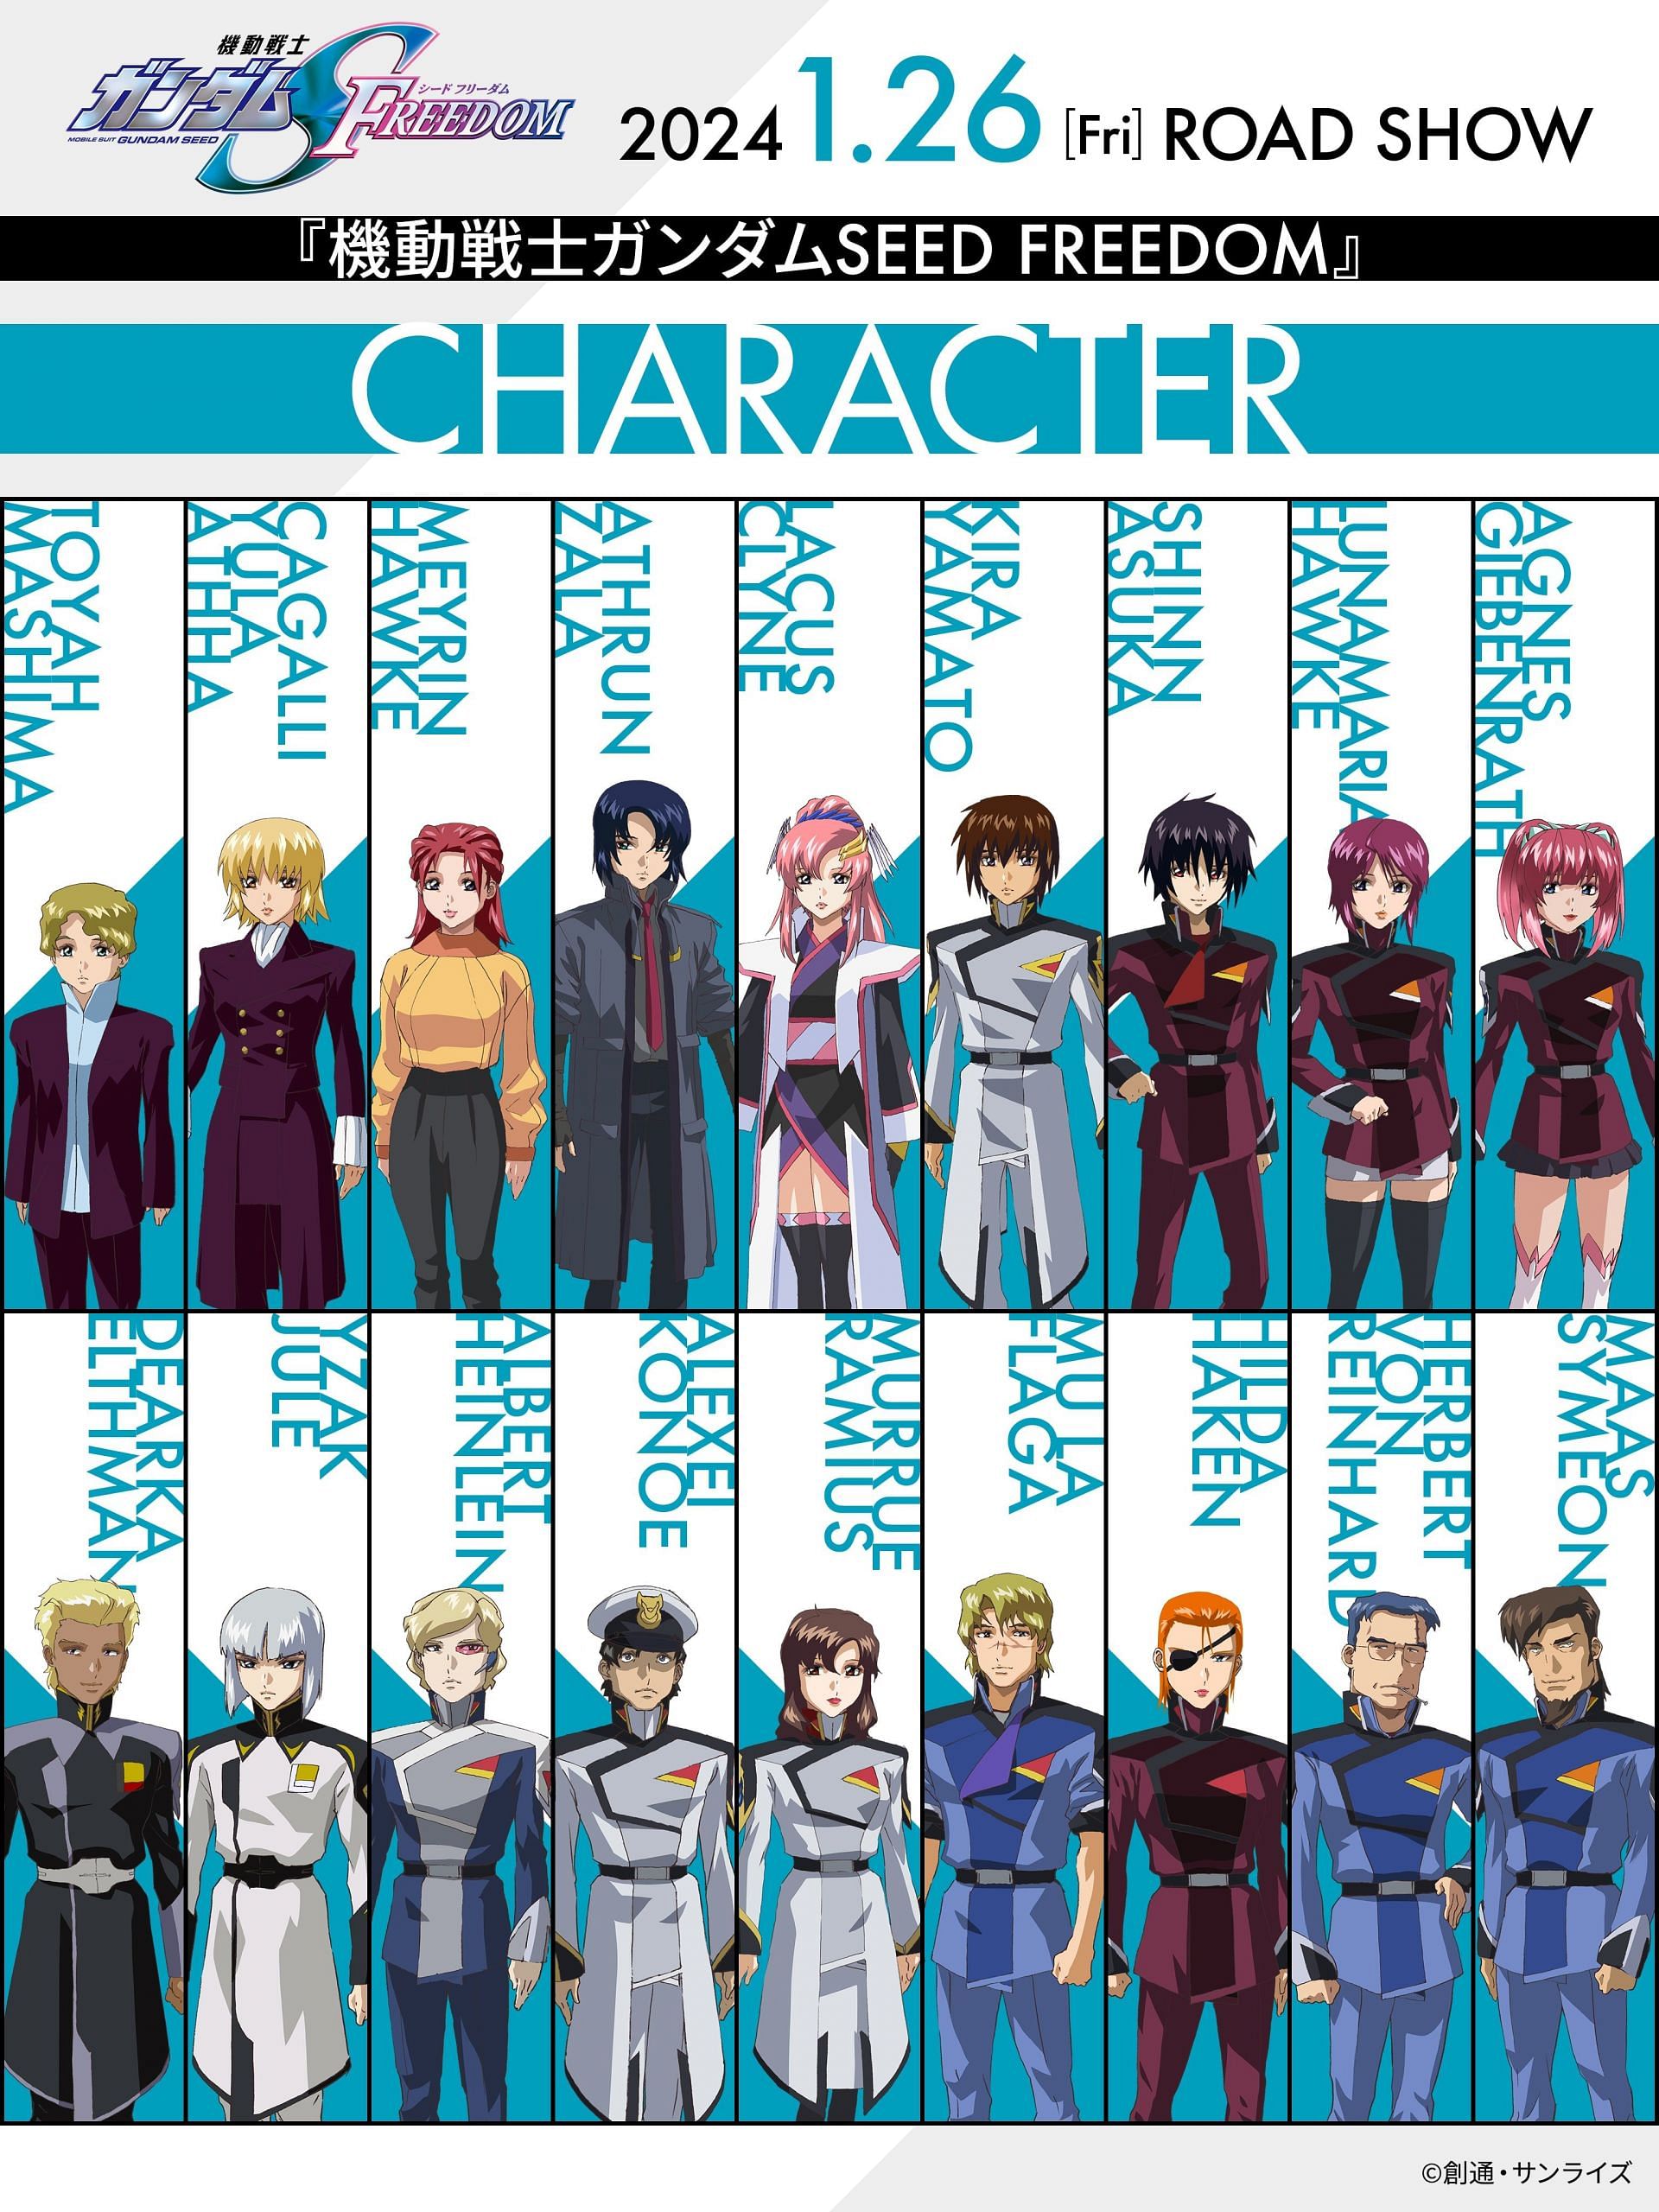 Some of the main characters of the upcoming film (Image via Bandai Namco Filmworks)